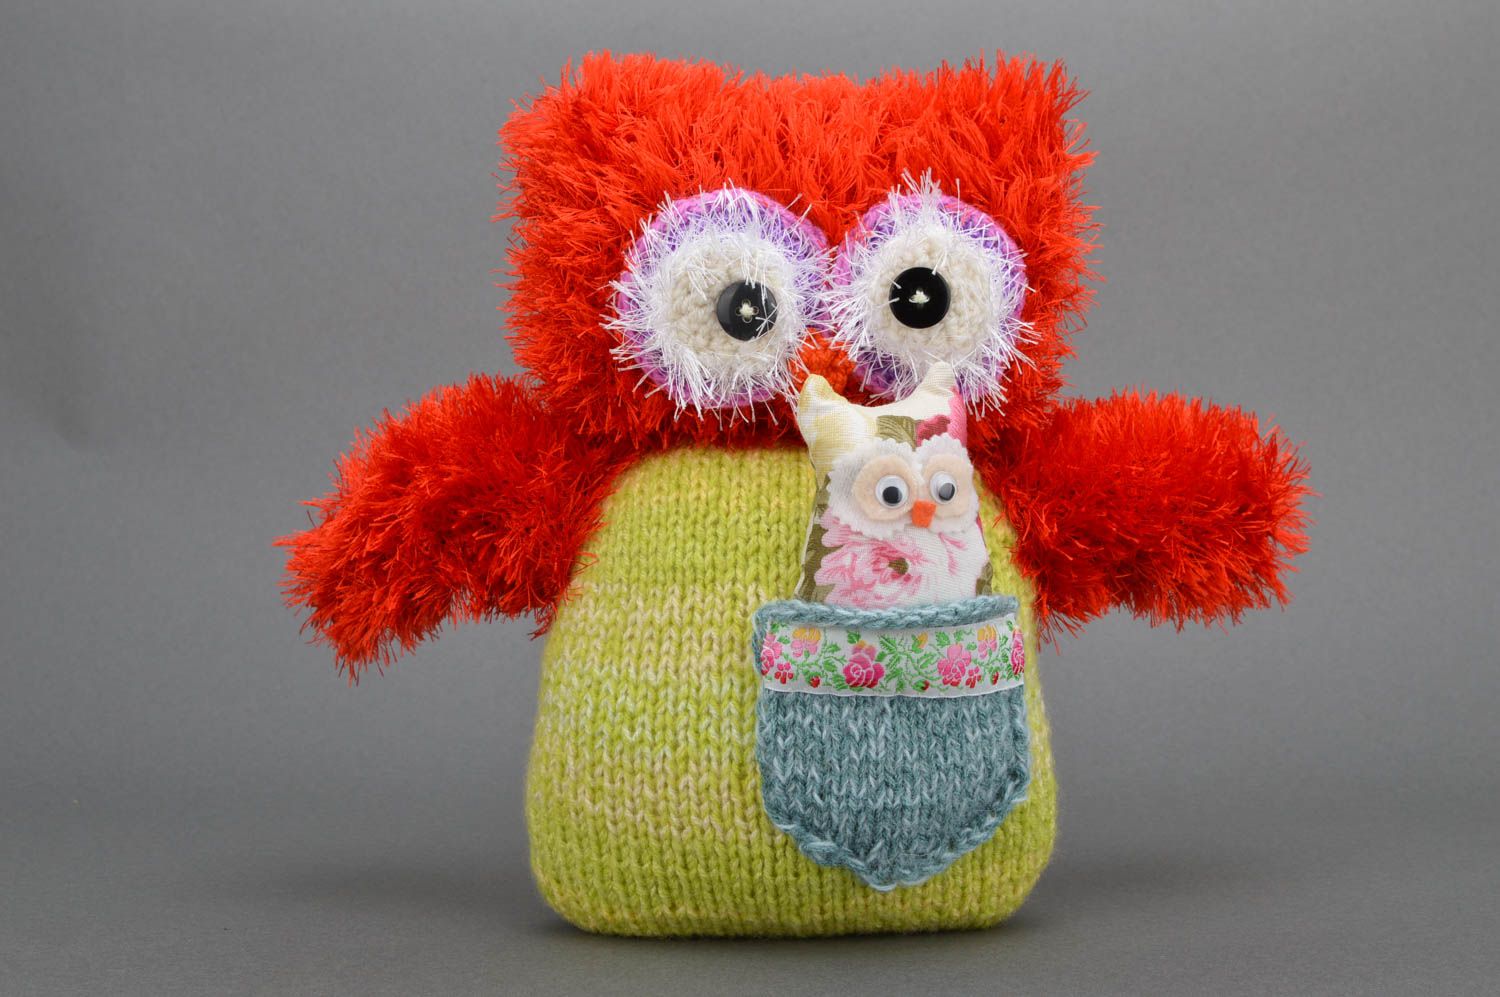 Handmade stuffed owl toy decorative soft toy gift for baby nursery decor ideas photo 2